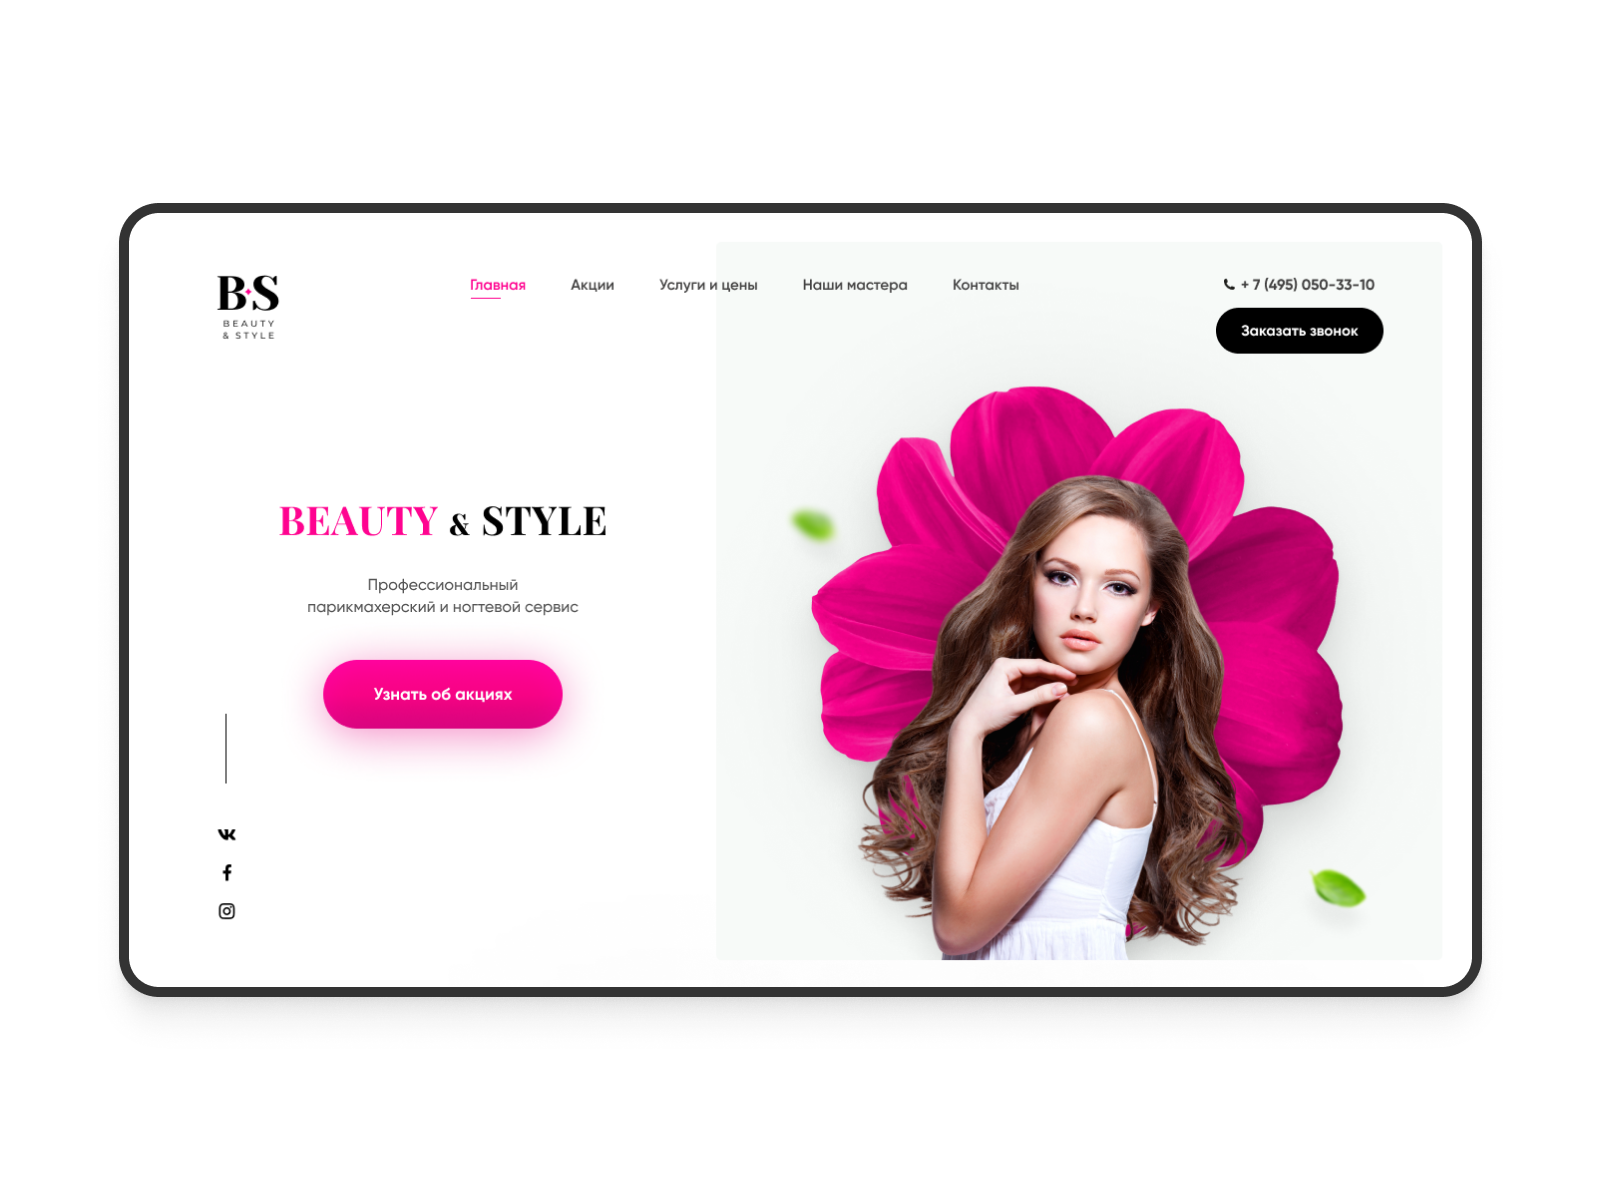 Дизайн сайта Бьюти. Пример сайта Beauty. Бьюти сервис дизайн сайта. Сайт салона красоты пример.